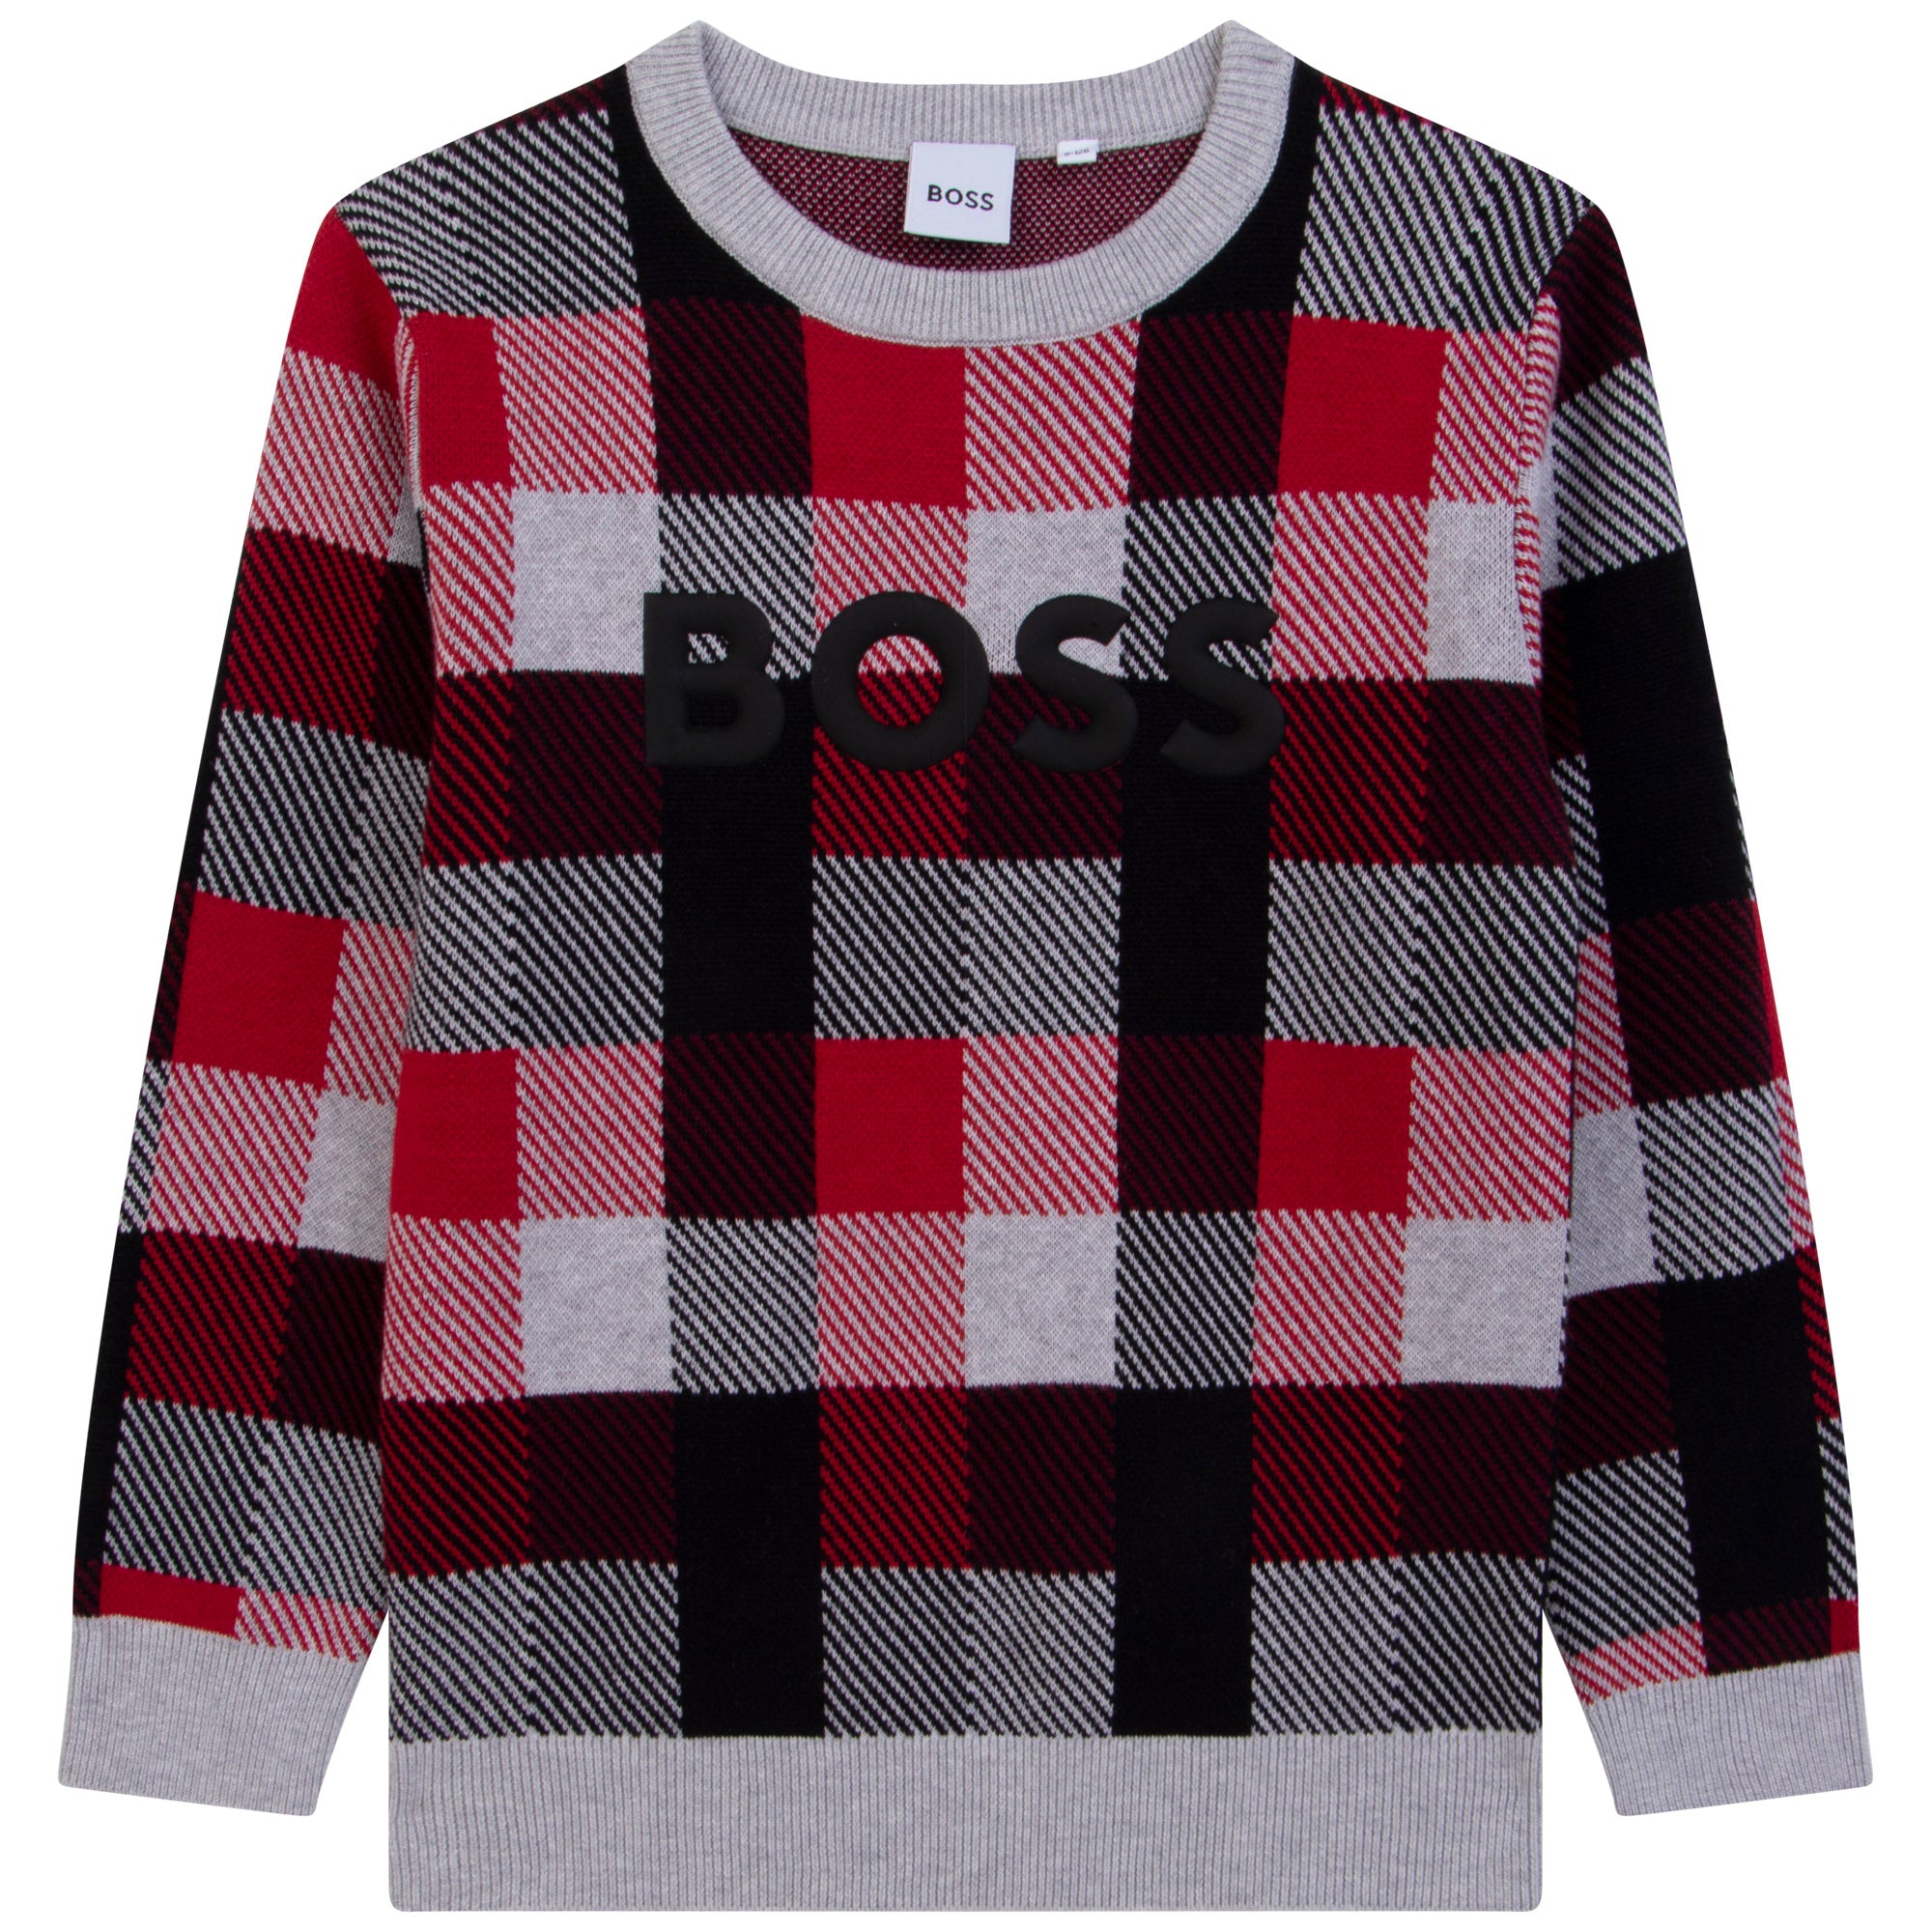 Hugo Boss Plaid Sweater